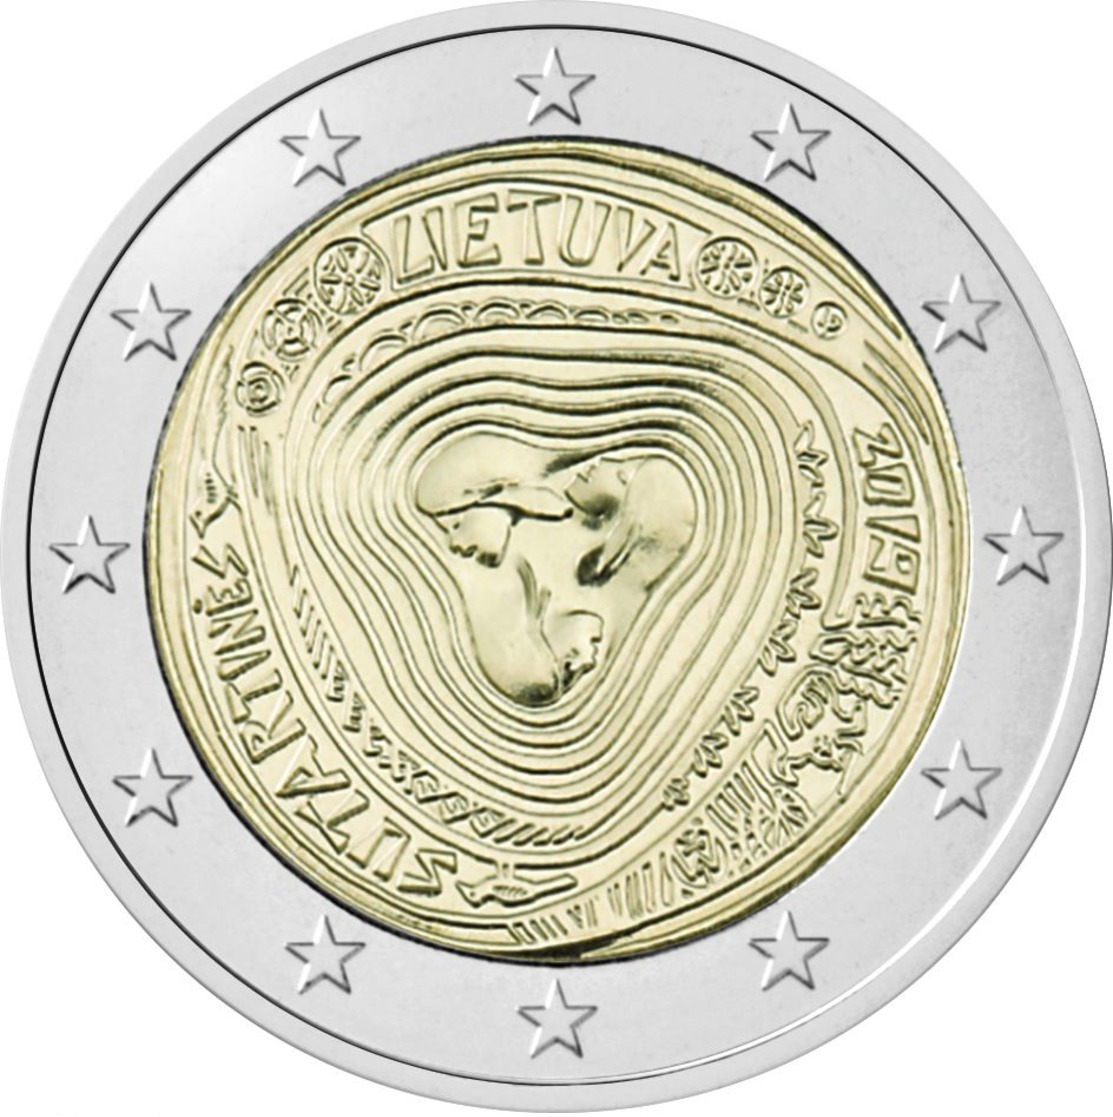 Lithuania 2 Euro Coin 2019 "Lithuanian Multipart Songs" UNC - Lituania